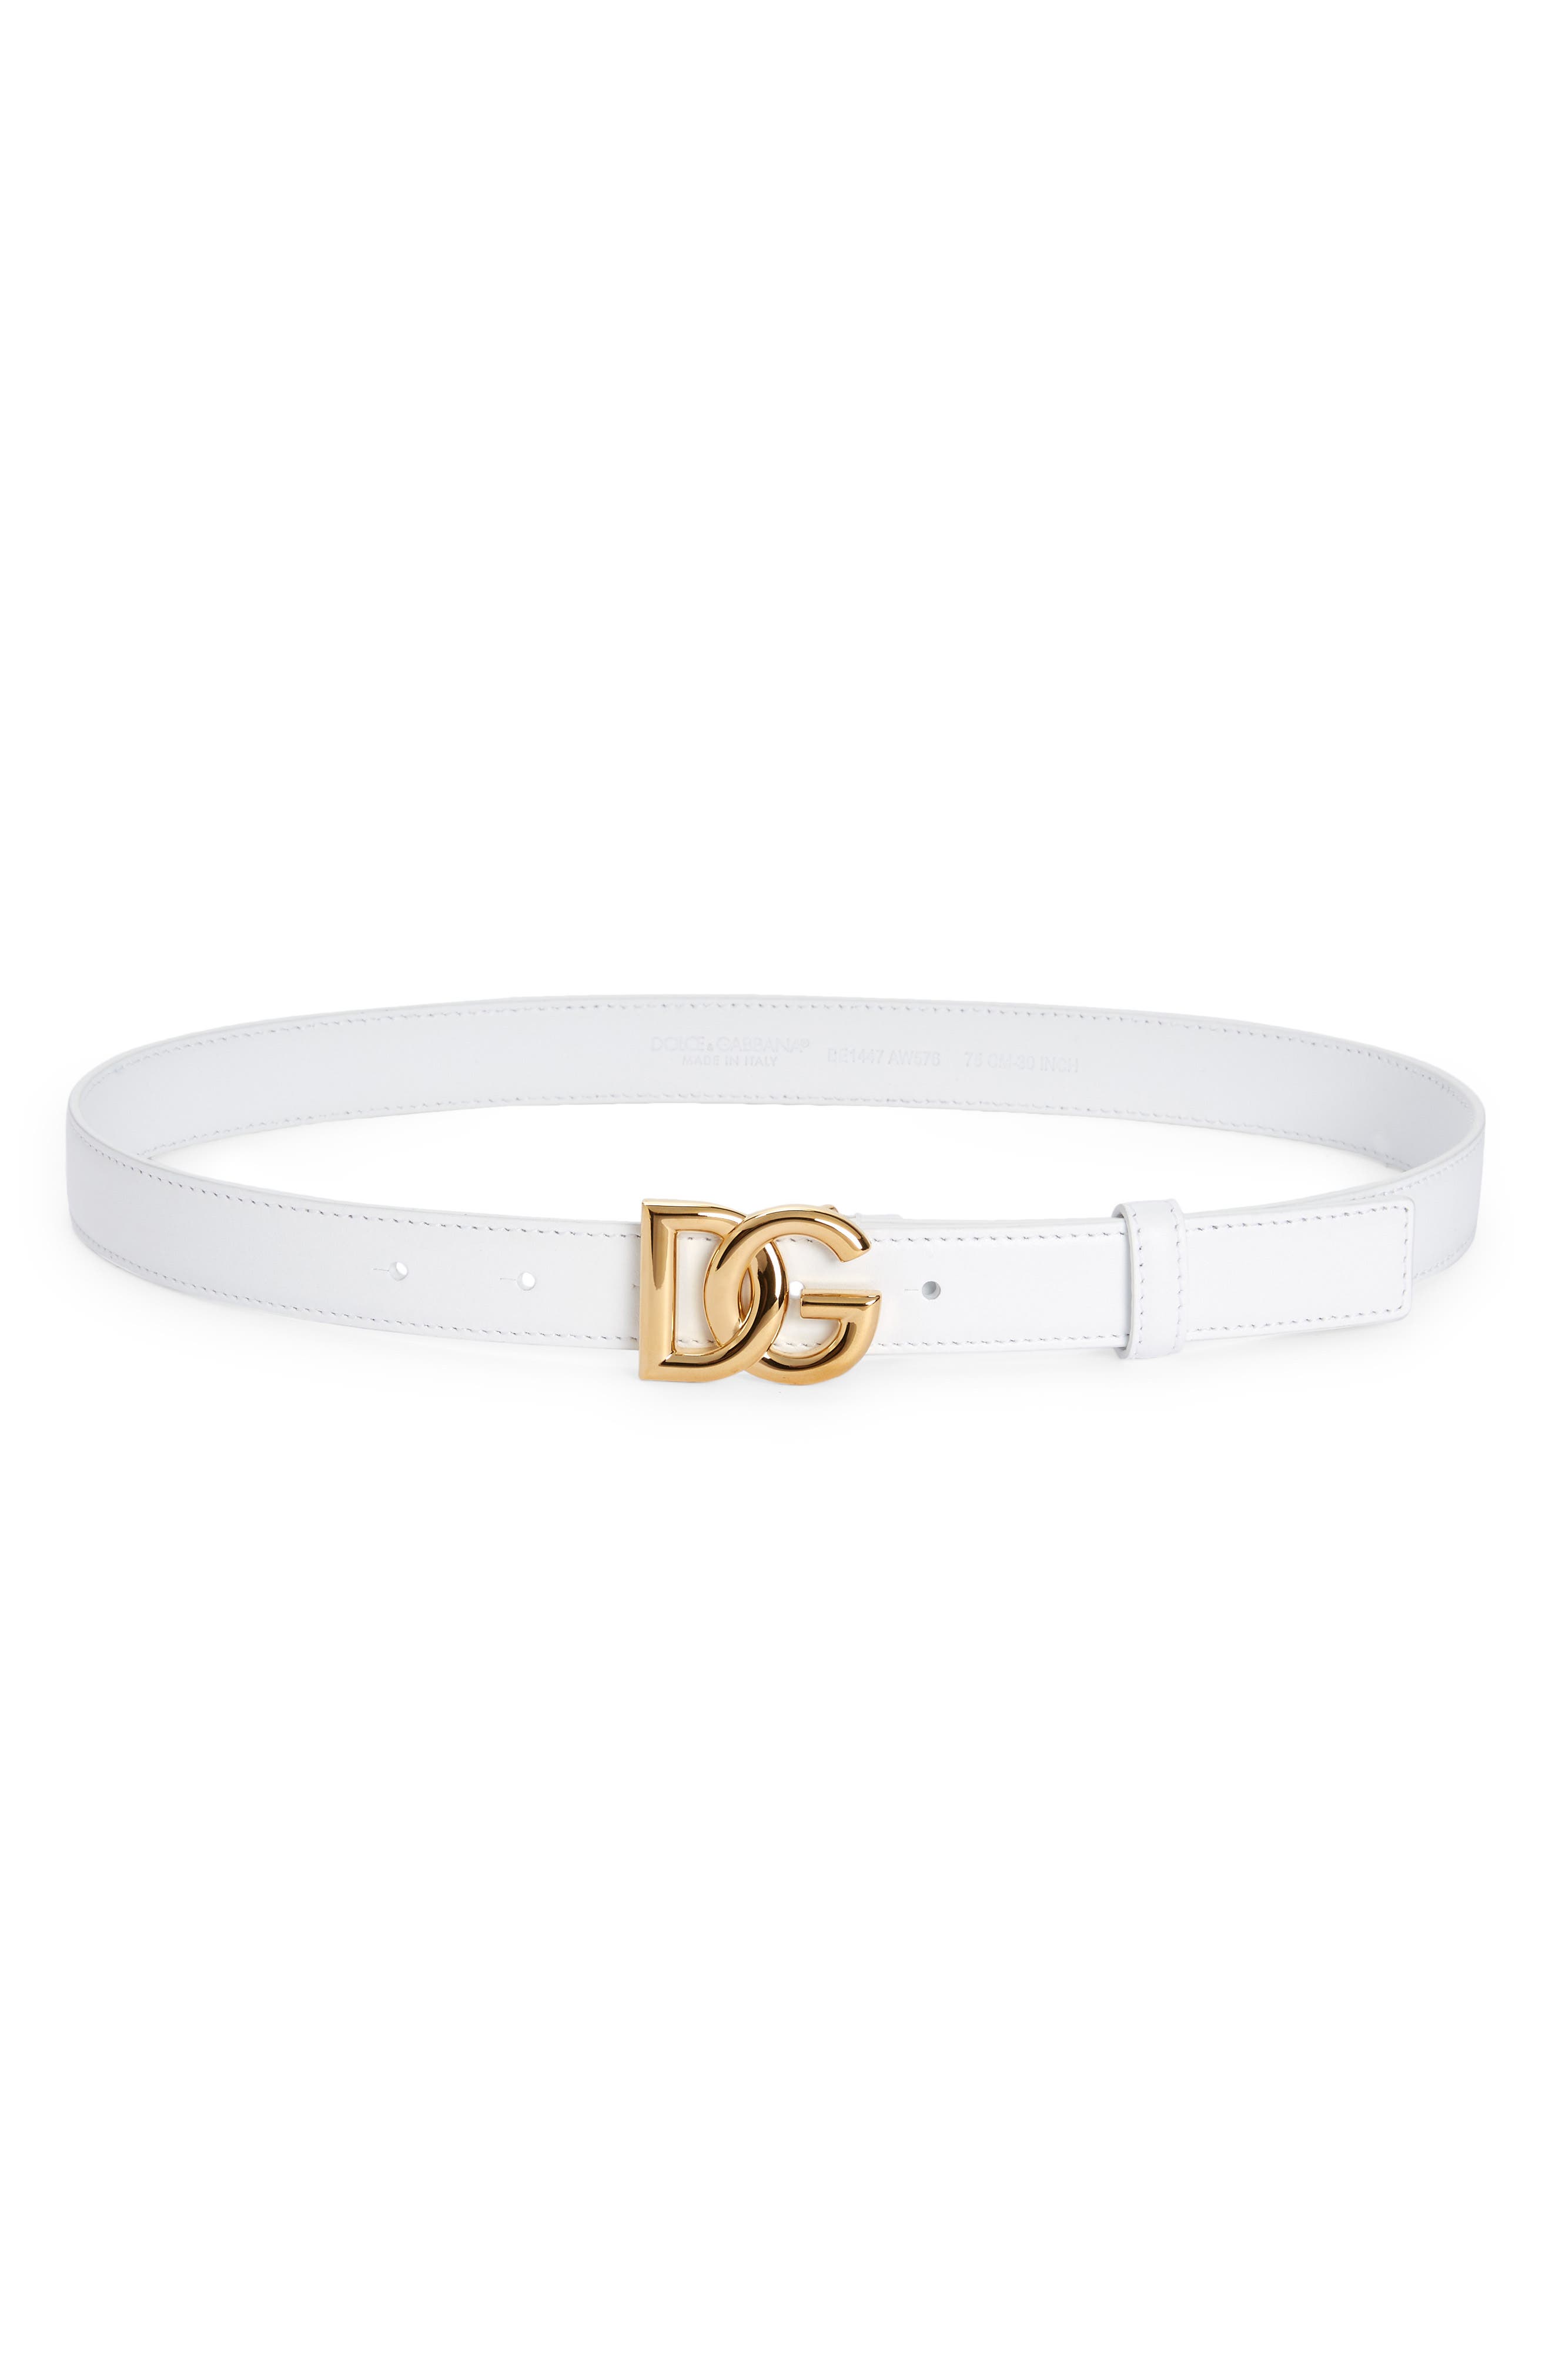 Dolce & Gabbana DG Logo Leather Belt in Bianco Ottico at Nordstrom, Size 75